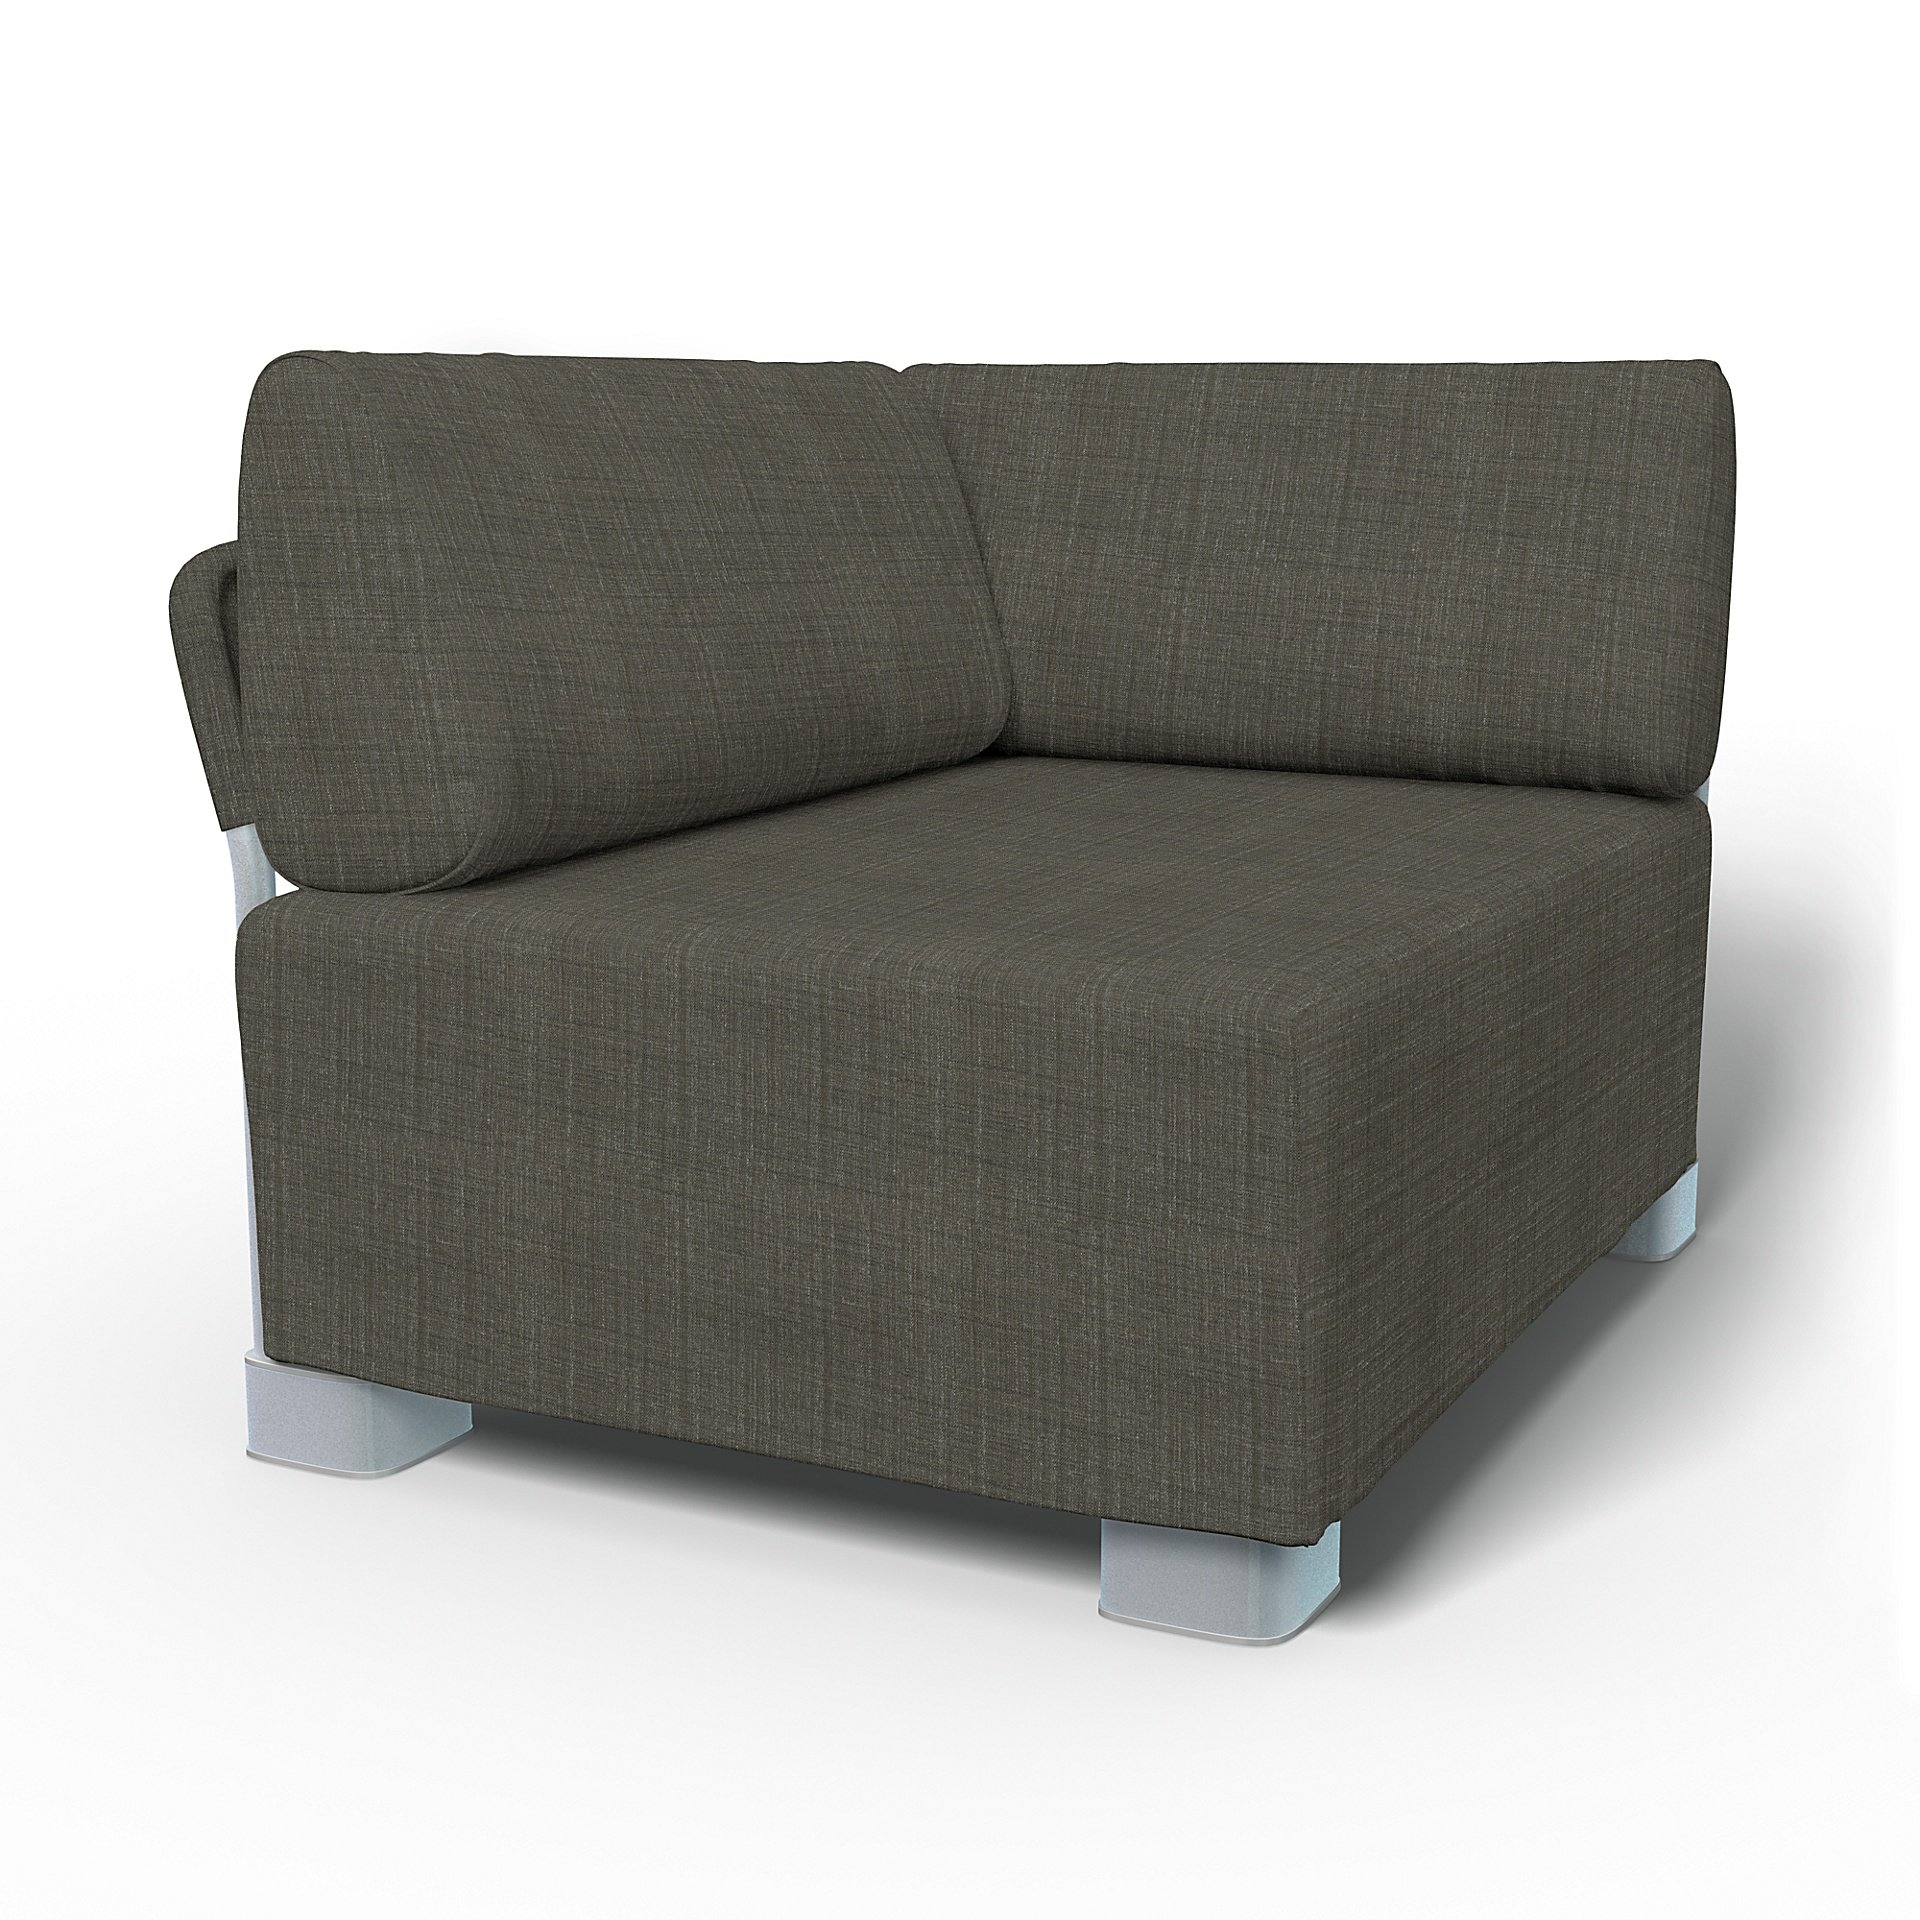 IKEA - Mysinge Corner Module Sofa Cover, Mole Brown, Boucle & Texture - Bemz